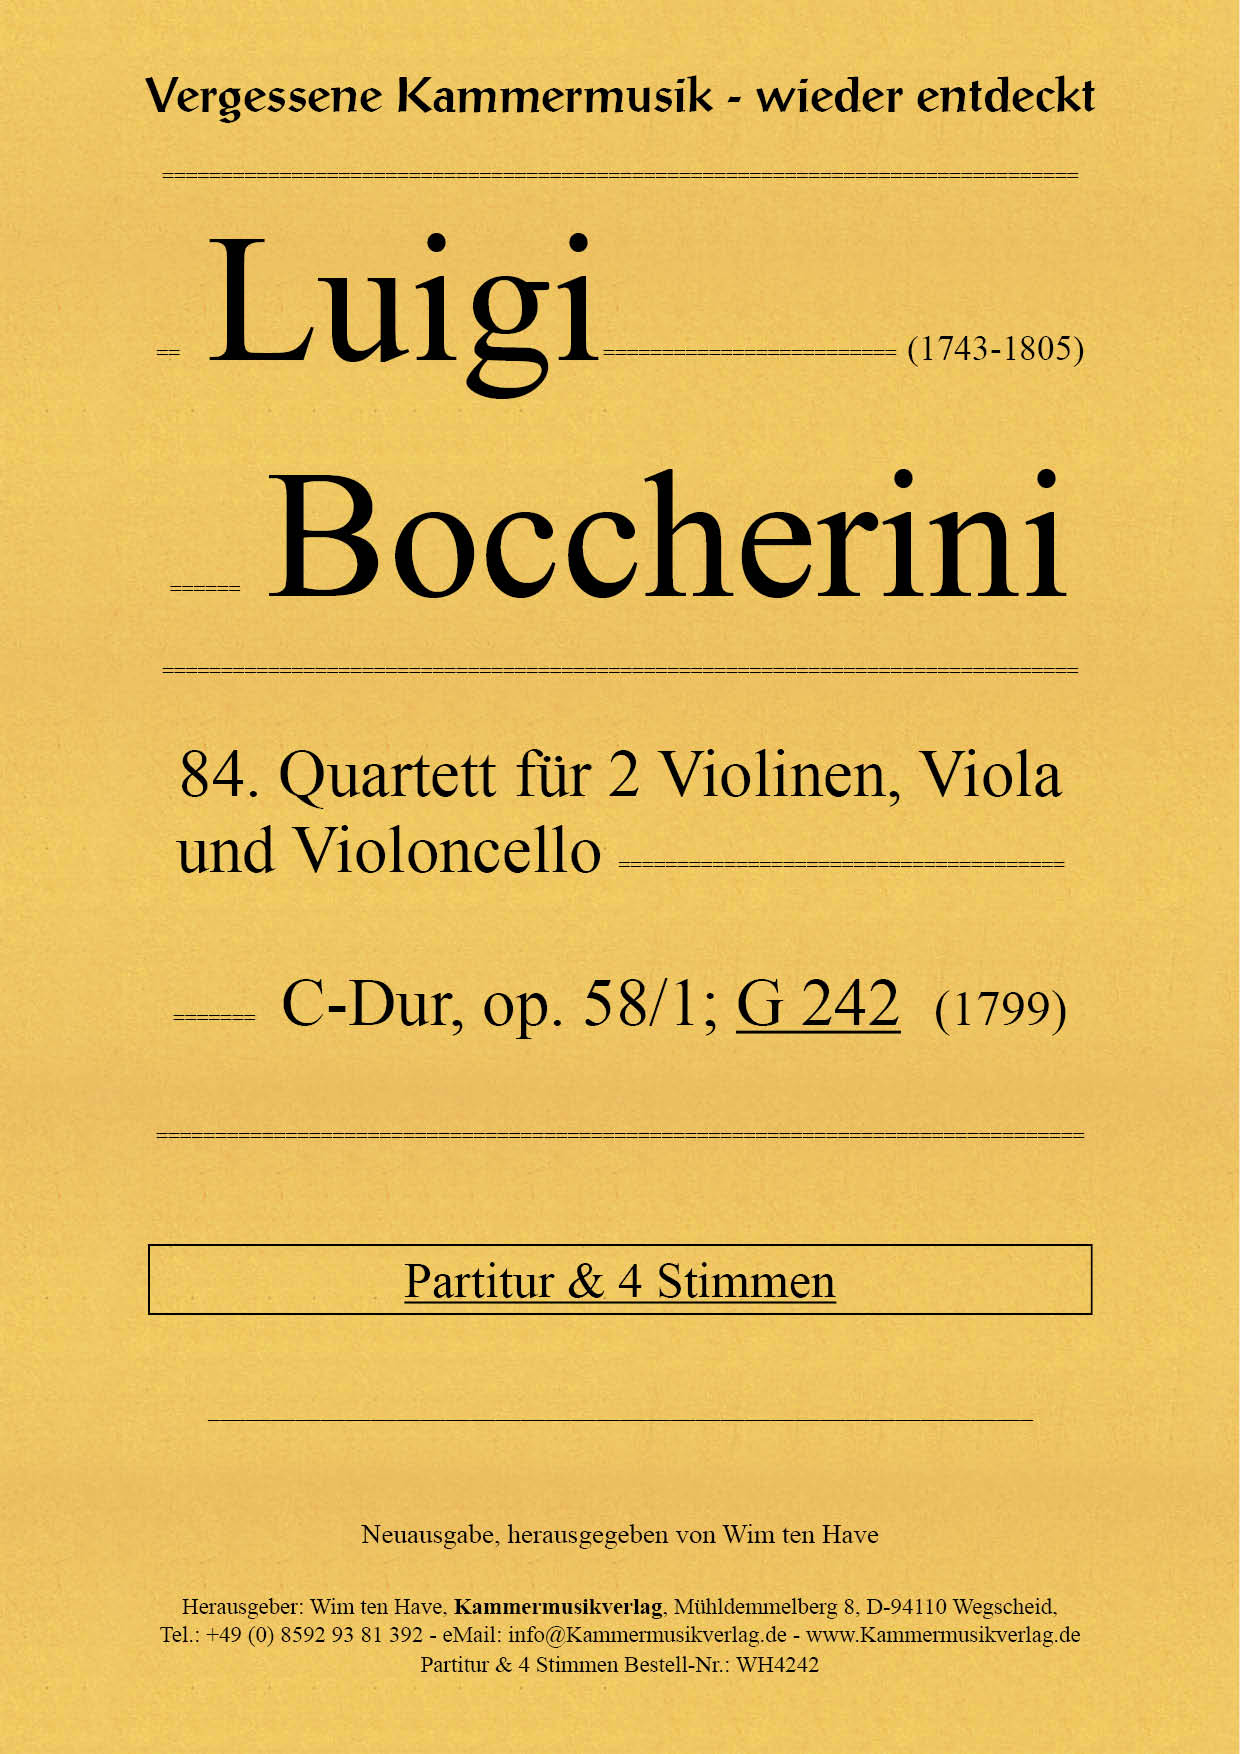 Boccherini: String Quartet in C Major, G 242, Op. 58, No. 1